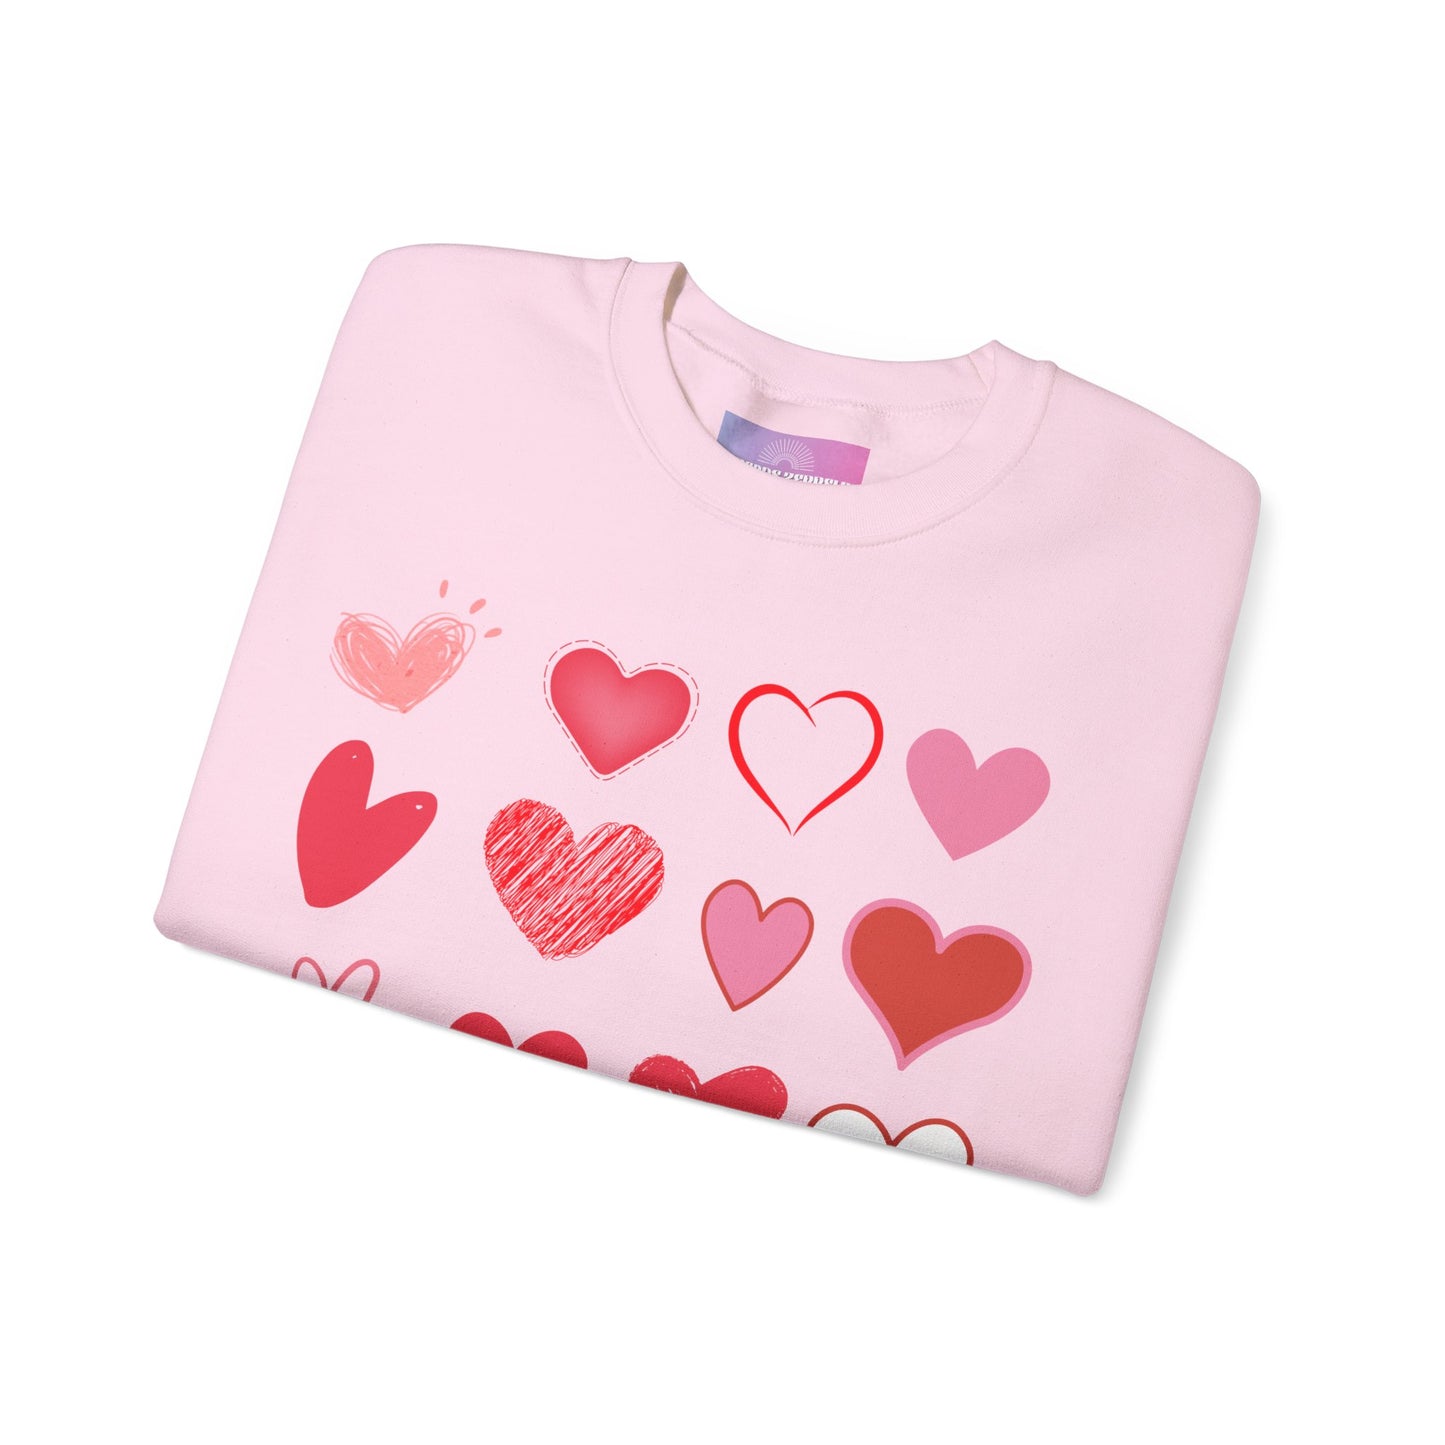 Retro Hearts Sweatshirt, Retro Valentines Day Sweater, Retro Crewneck, Cute Valentines Day Shirt, Premium Unisex Crewneck